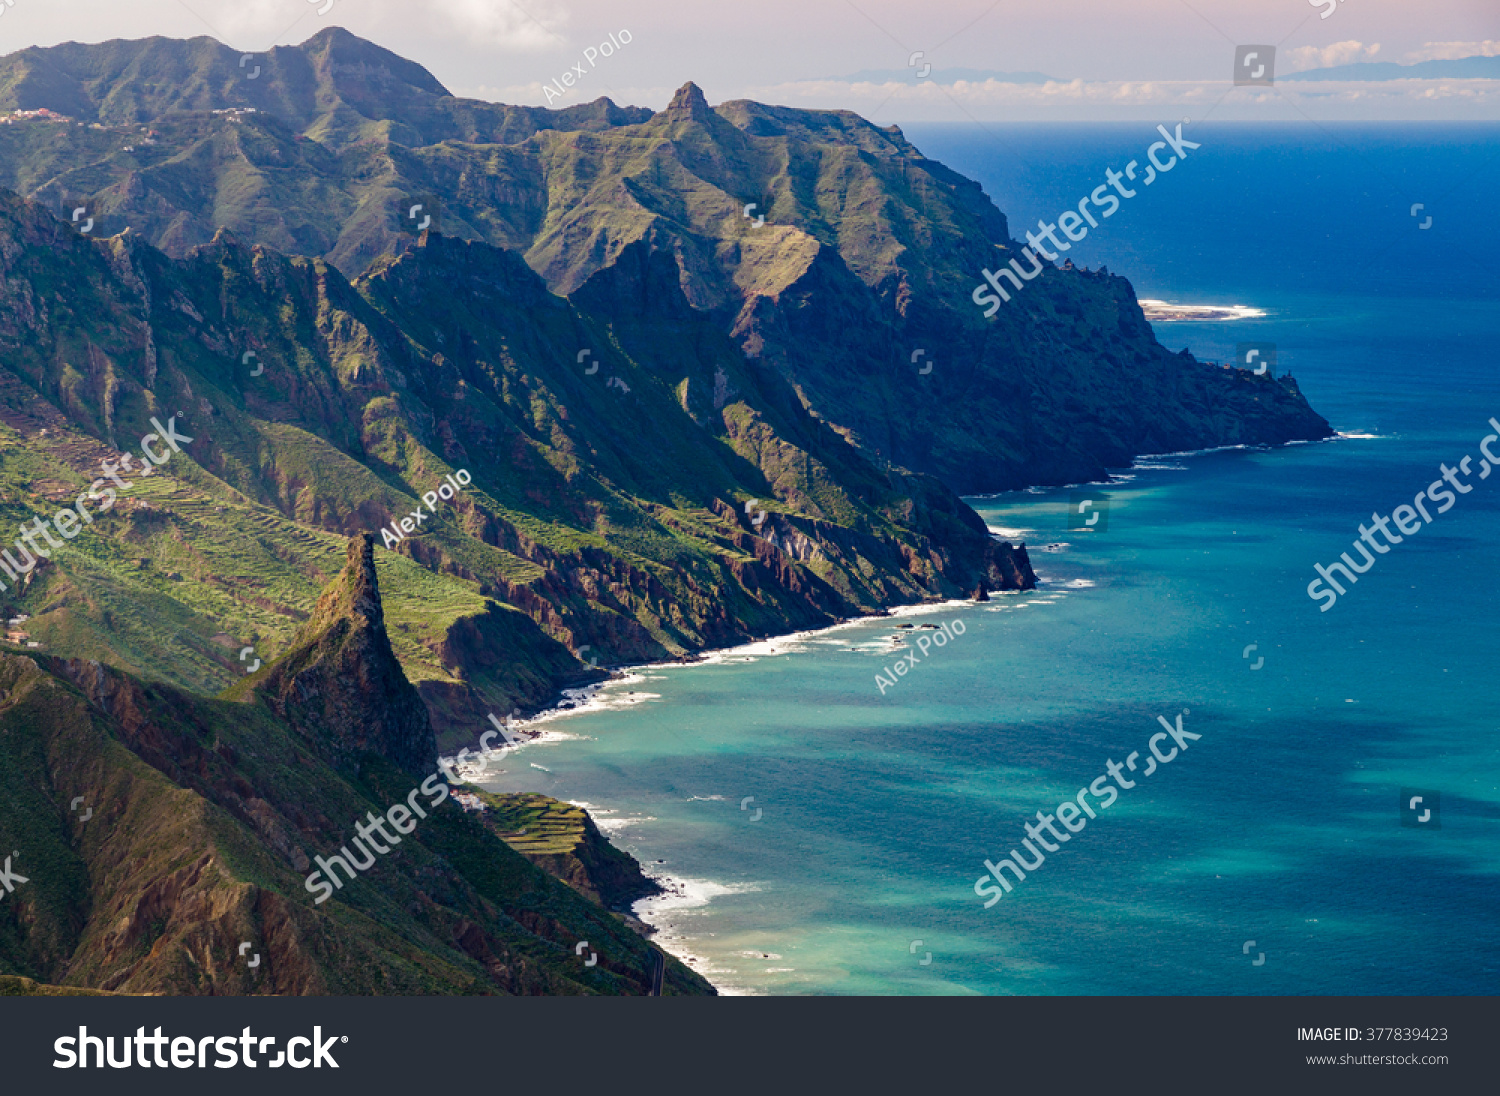 Roque de las Animas and Anaga mountains, Tenerife island, Spain #377839423